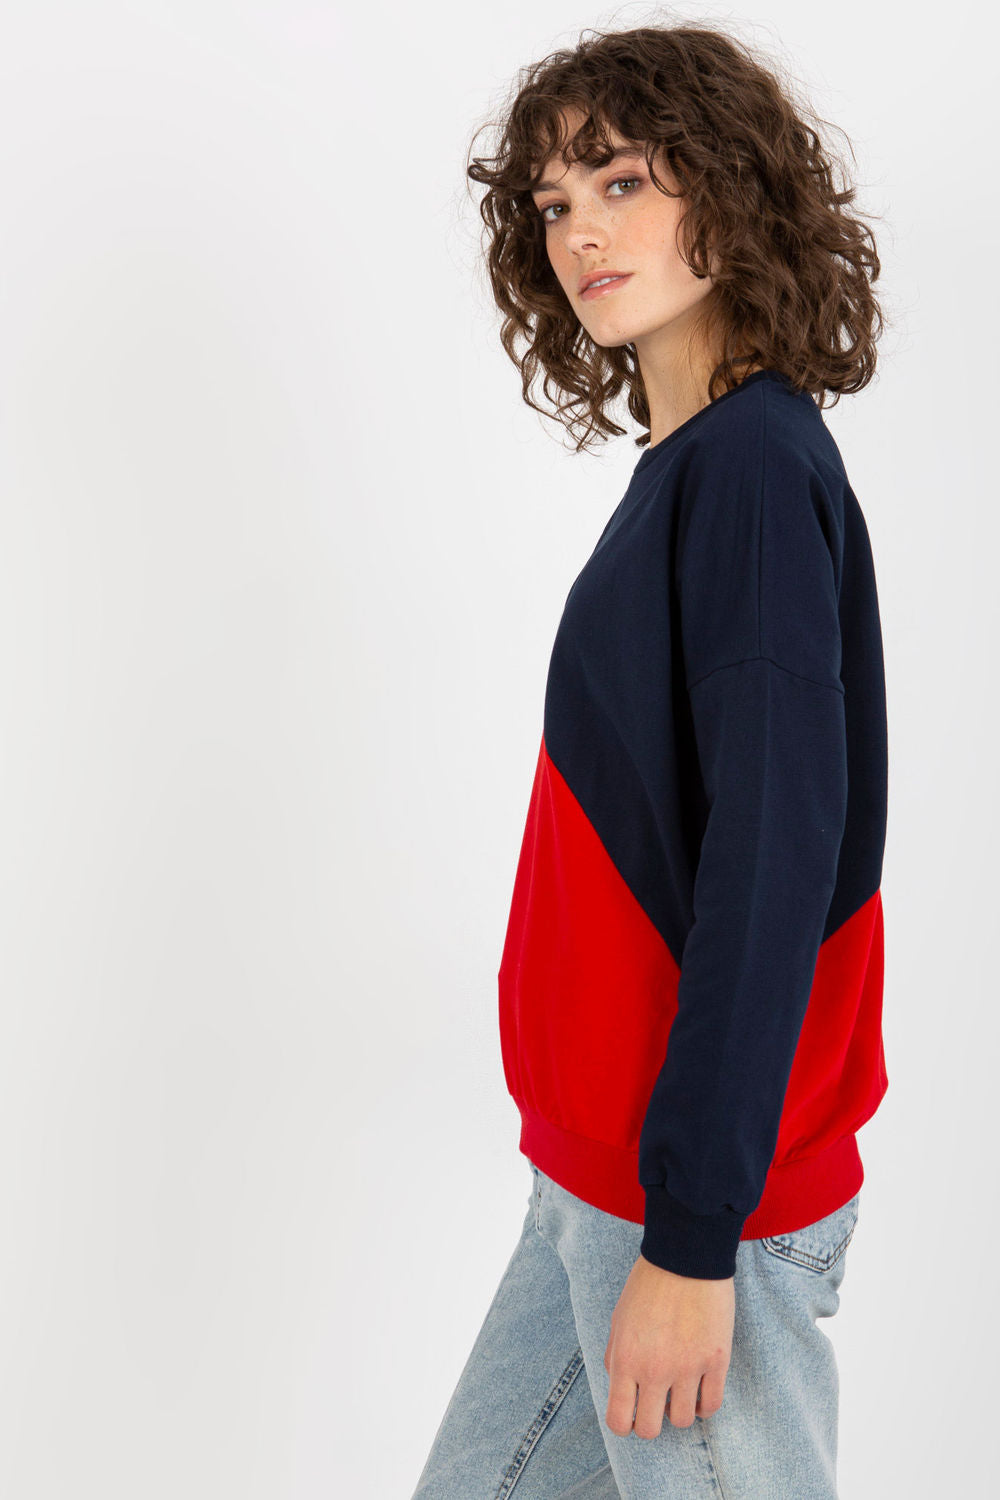 Sweatshirt model 175193 Elsy Style Sweatshirts for Women